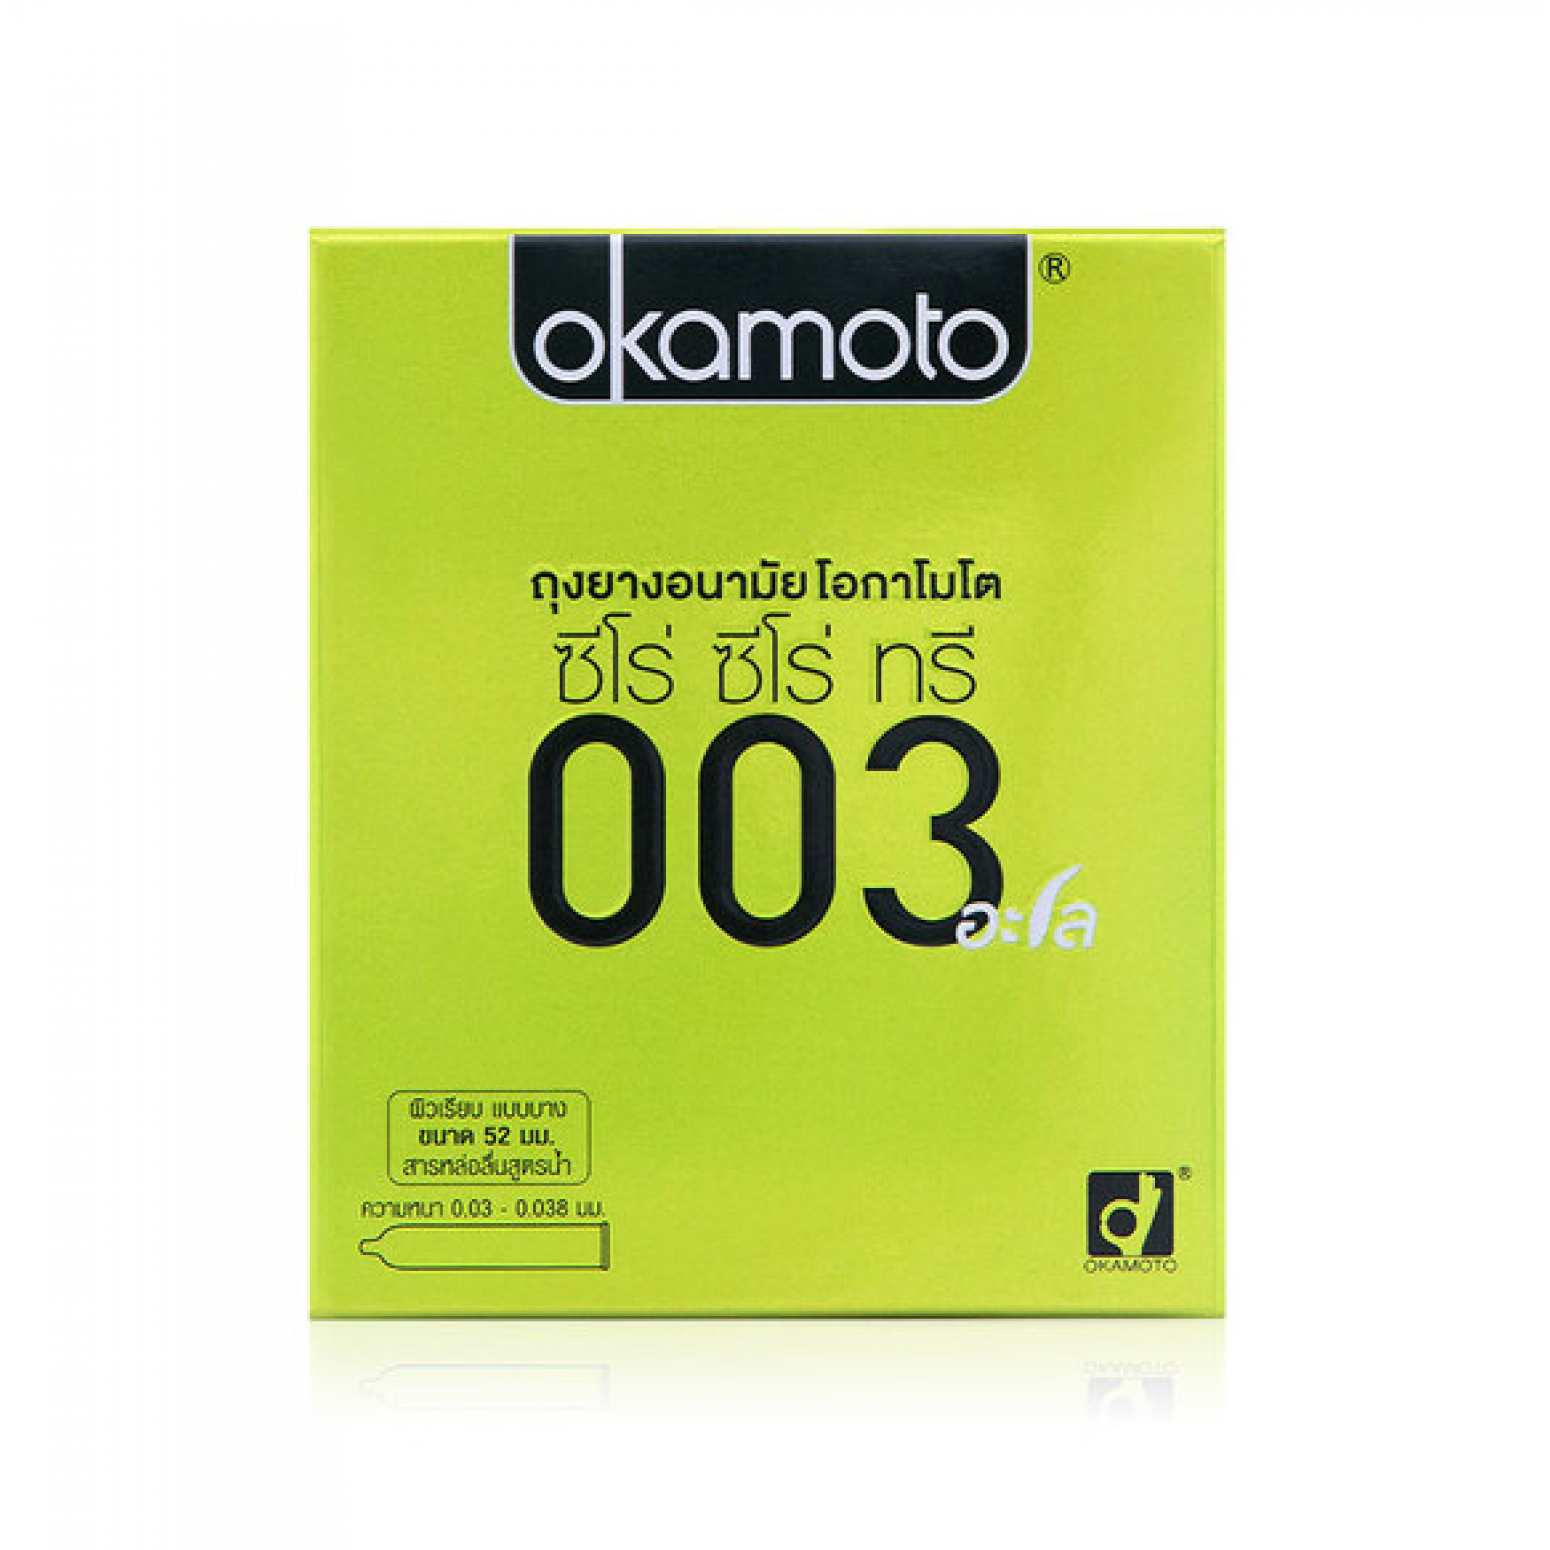 Okamoto 003 Aloe Condom